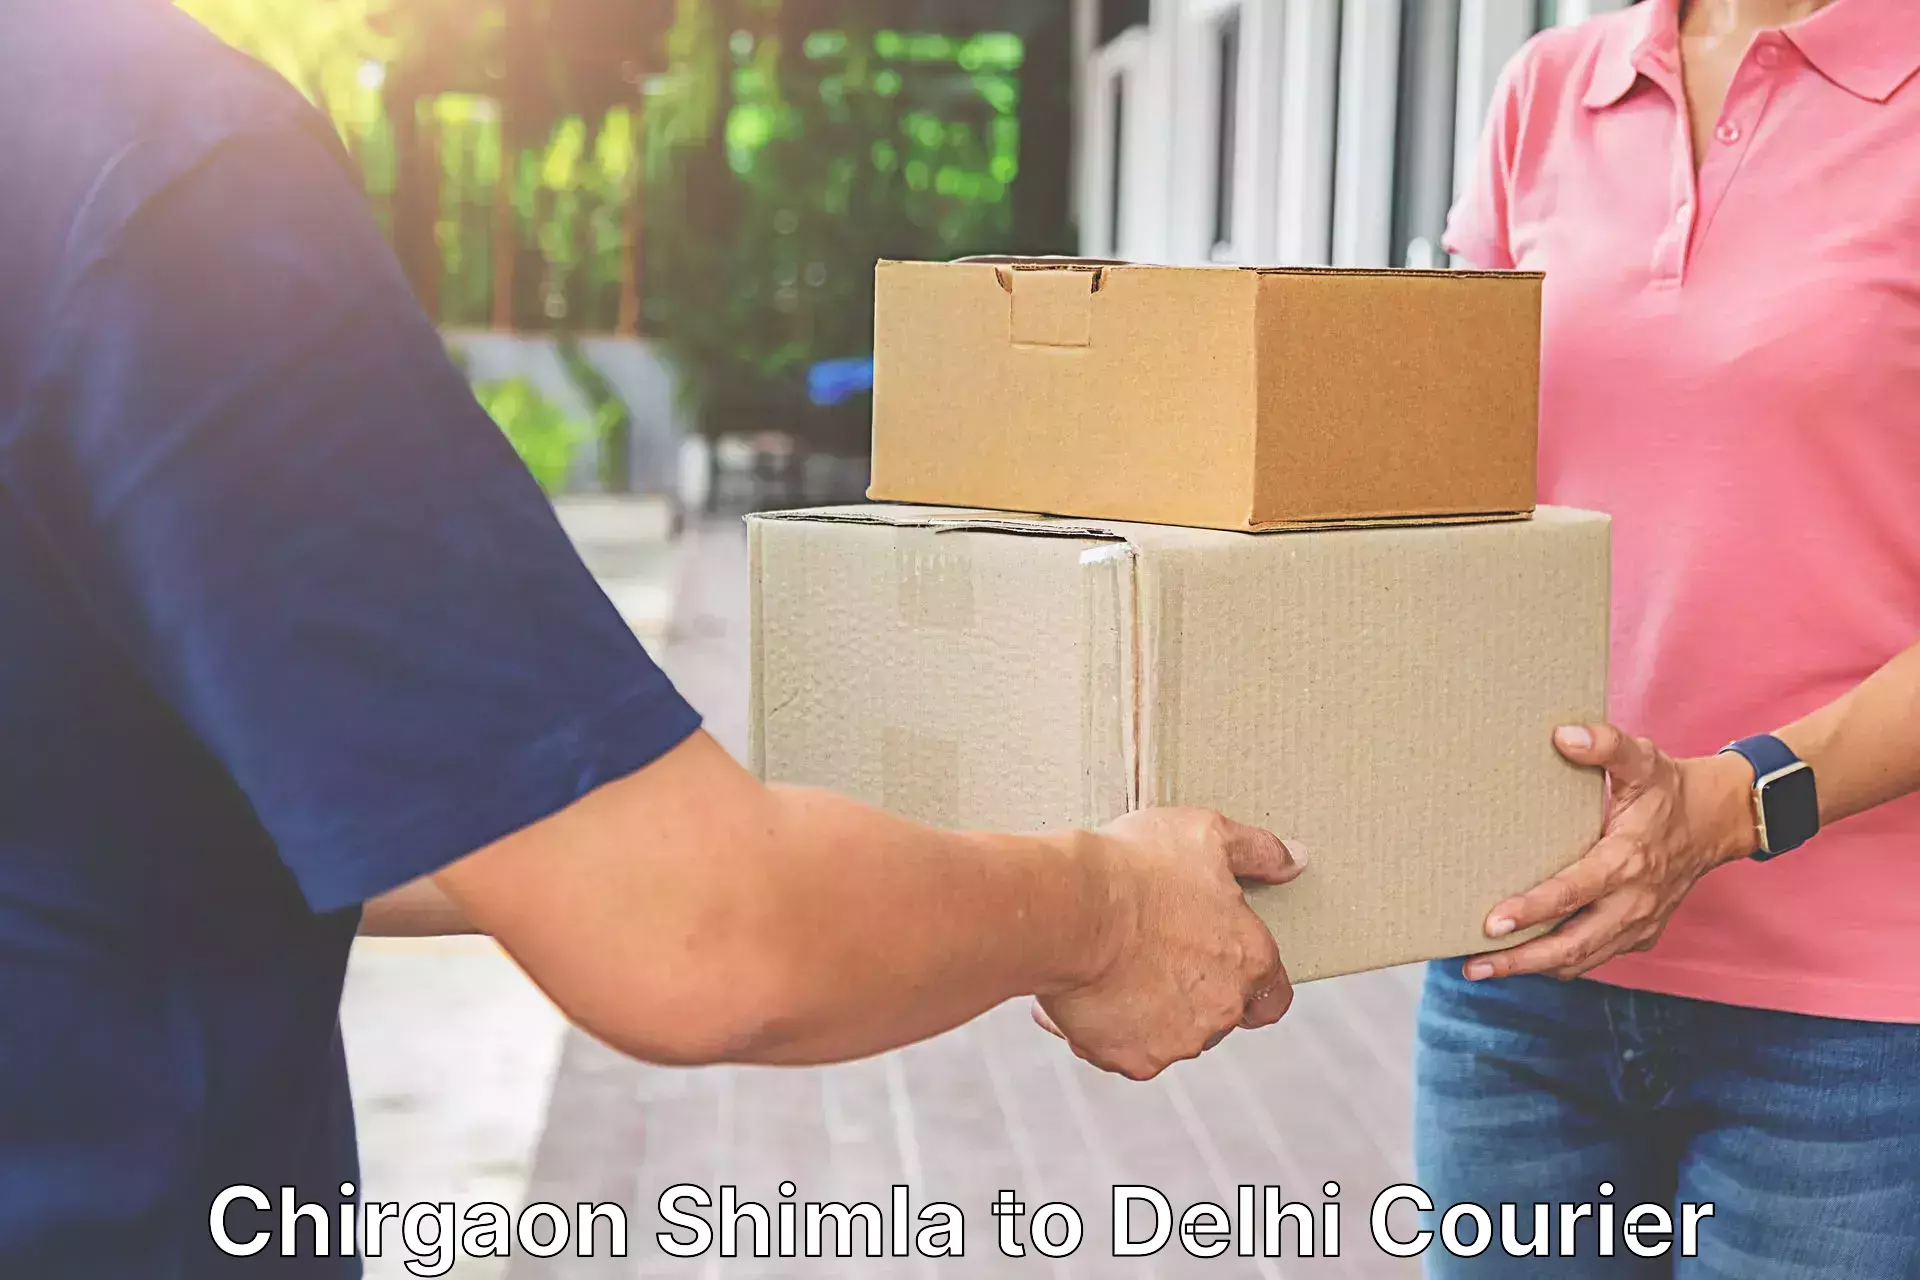 International parcel service Chirgaon Shimla to Lodhi Road